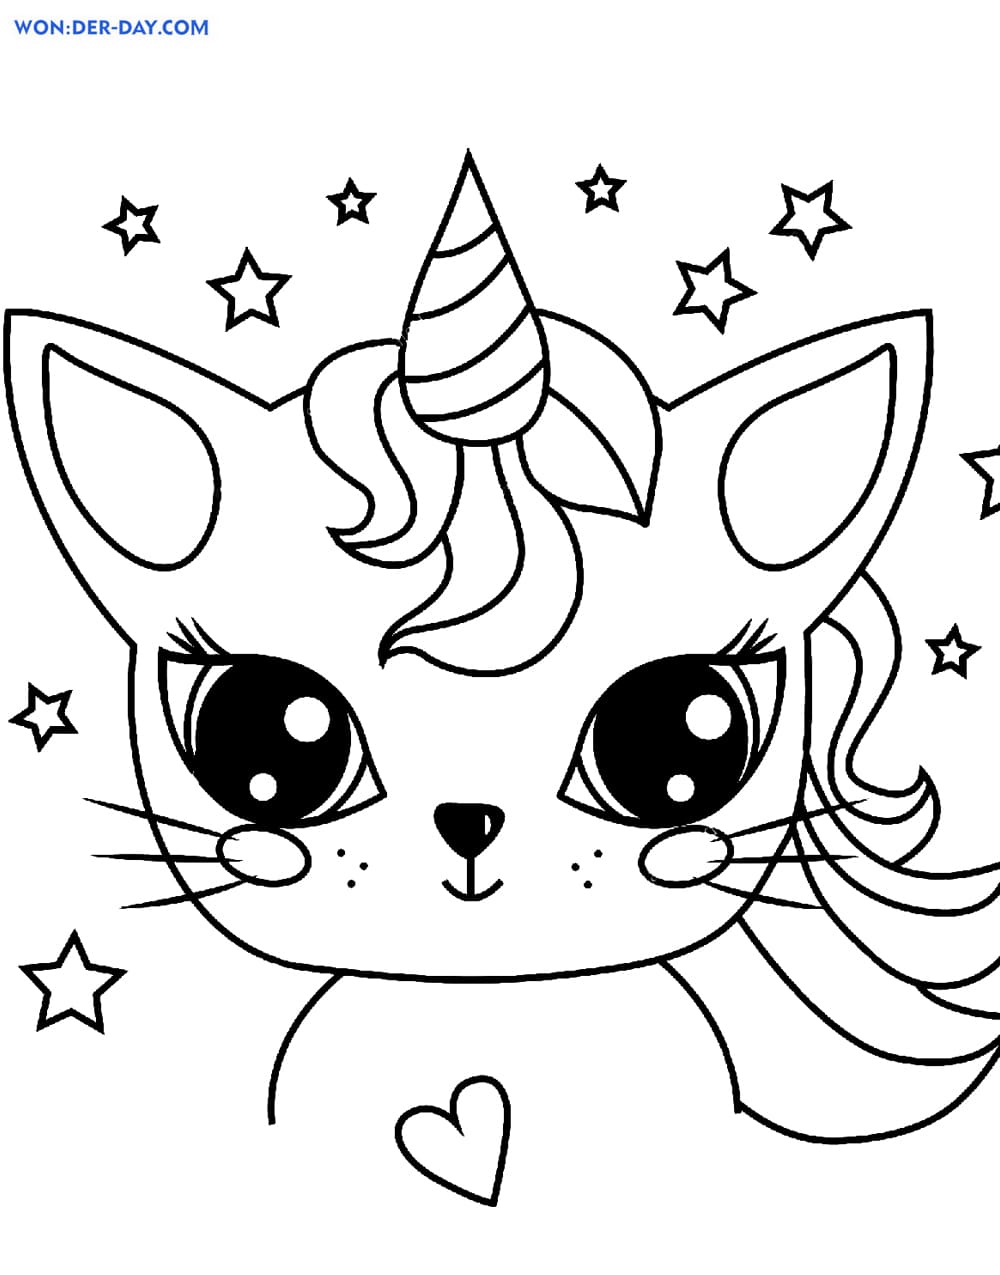 contrabando sexual Príncipe Dibujo de Gato-Unicornio para colorear | Wonder-day.com